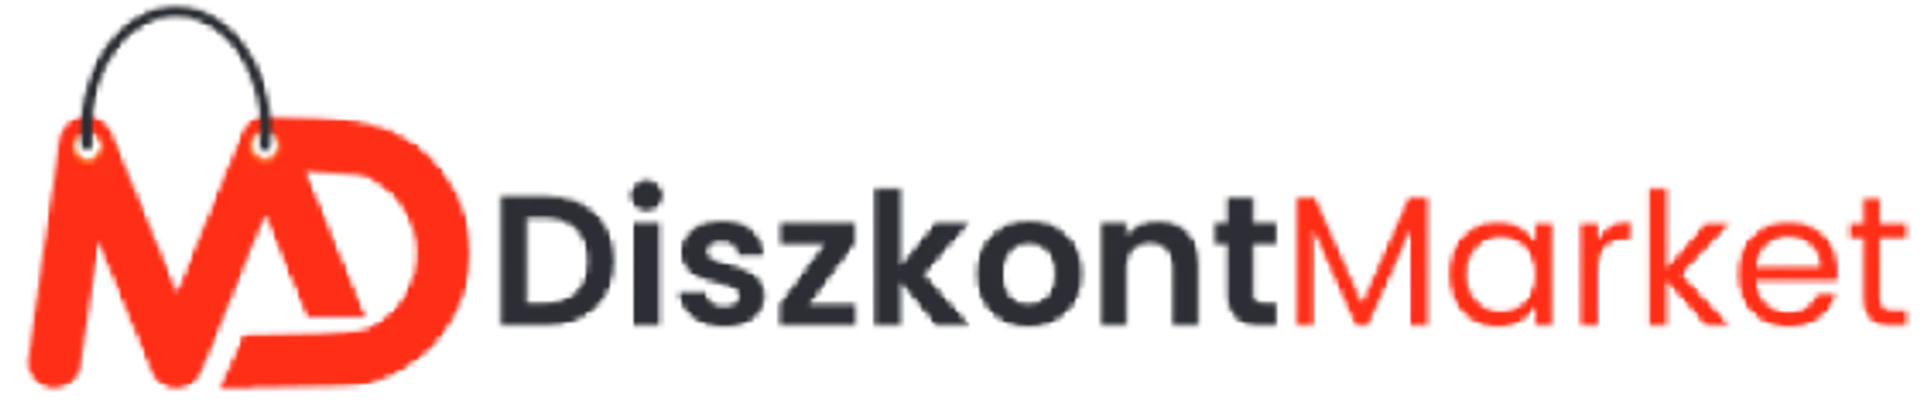 DISZKONT MARKET logo